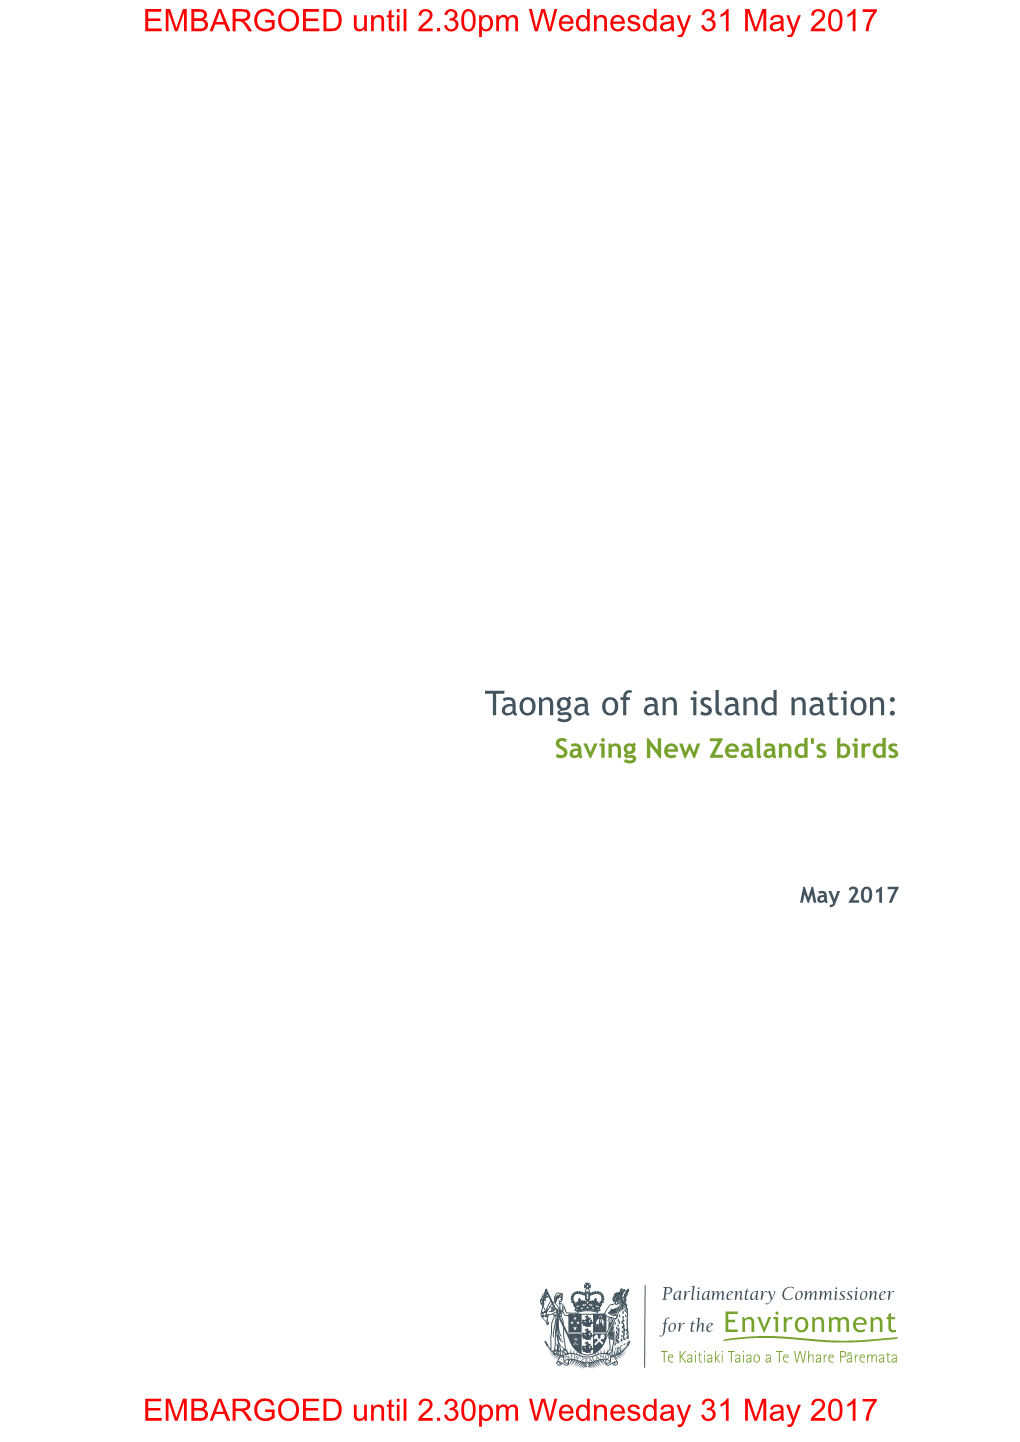 Taonga of an Island Nation: Saving New Zealand's Birds